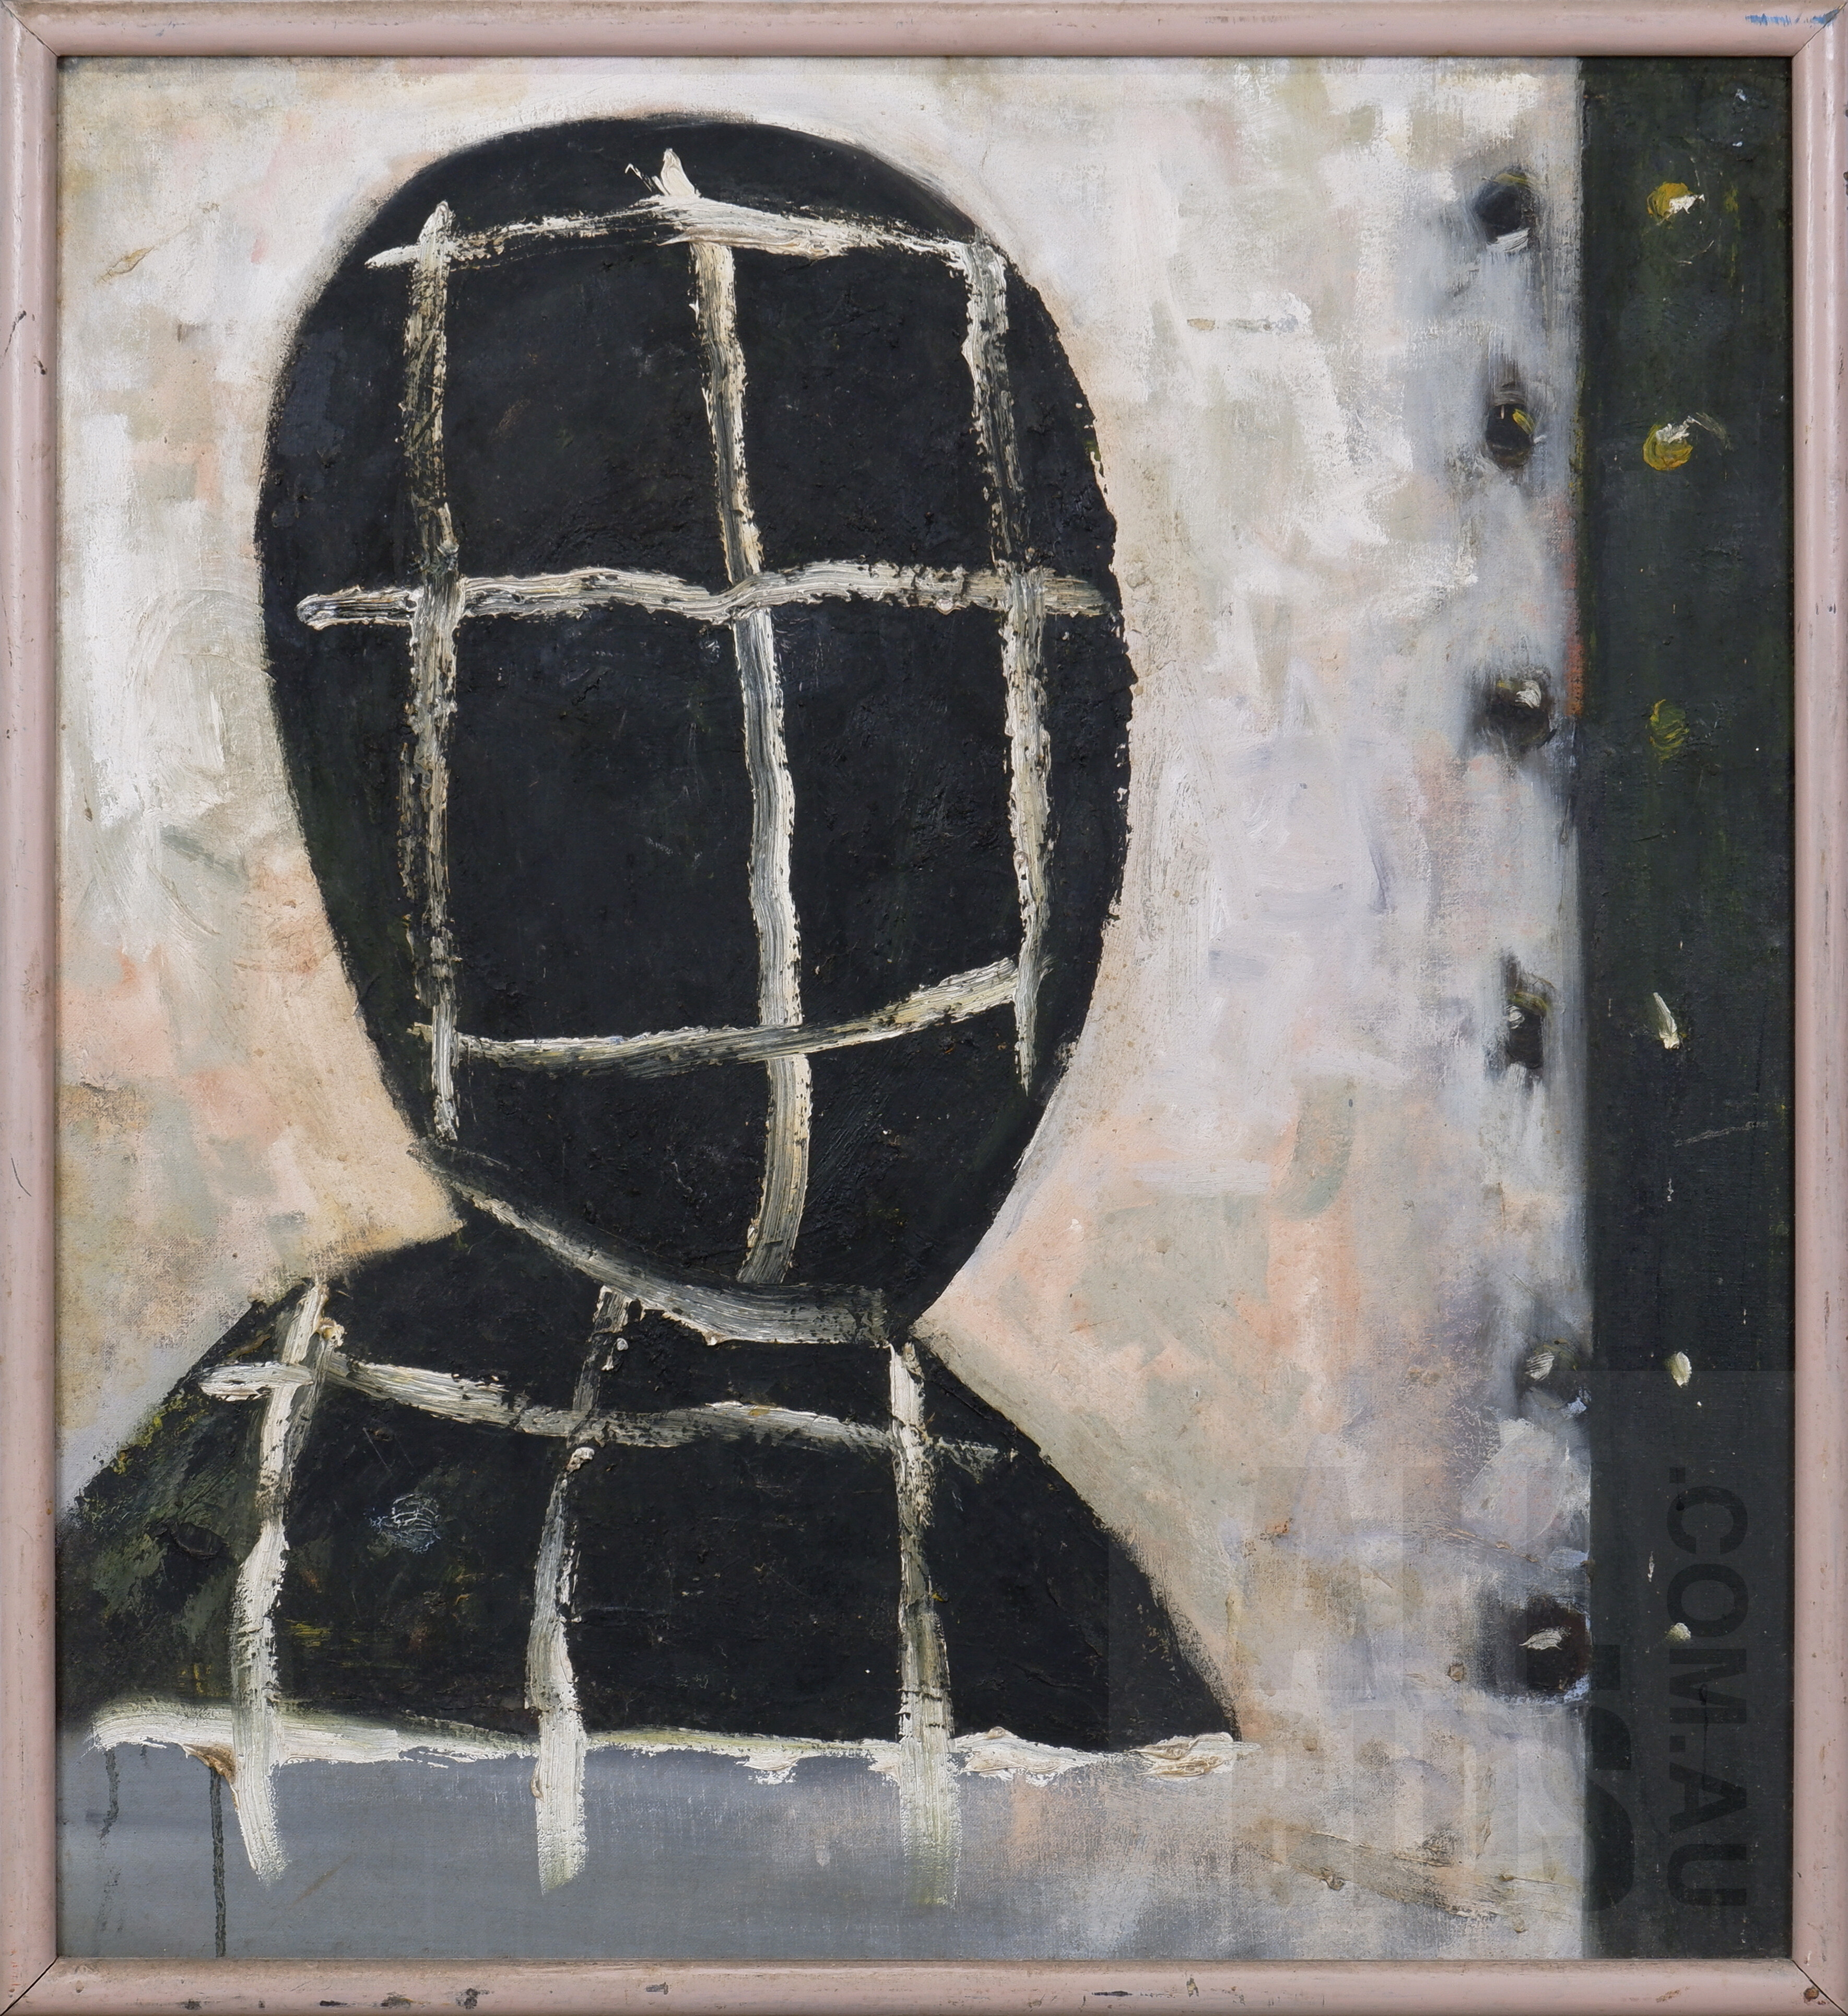 'Christopher Snee (born 1957), Head 1987, Oil on Canvas on Board, 59 x 54 cm'